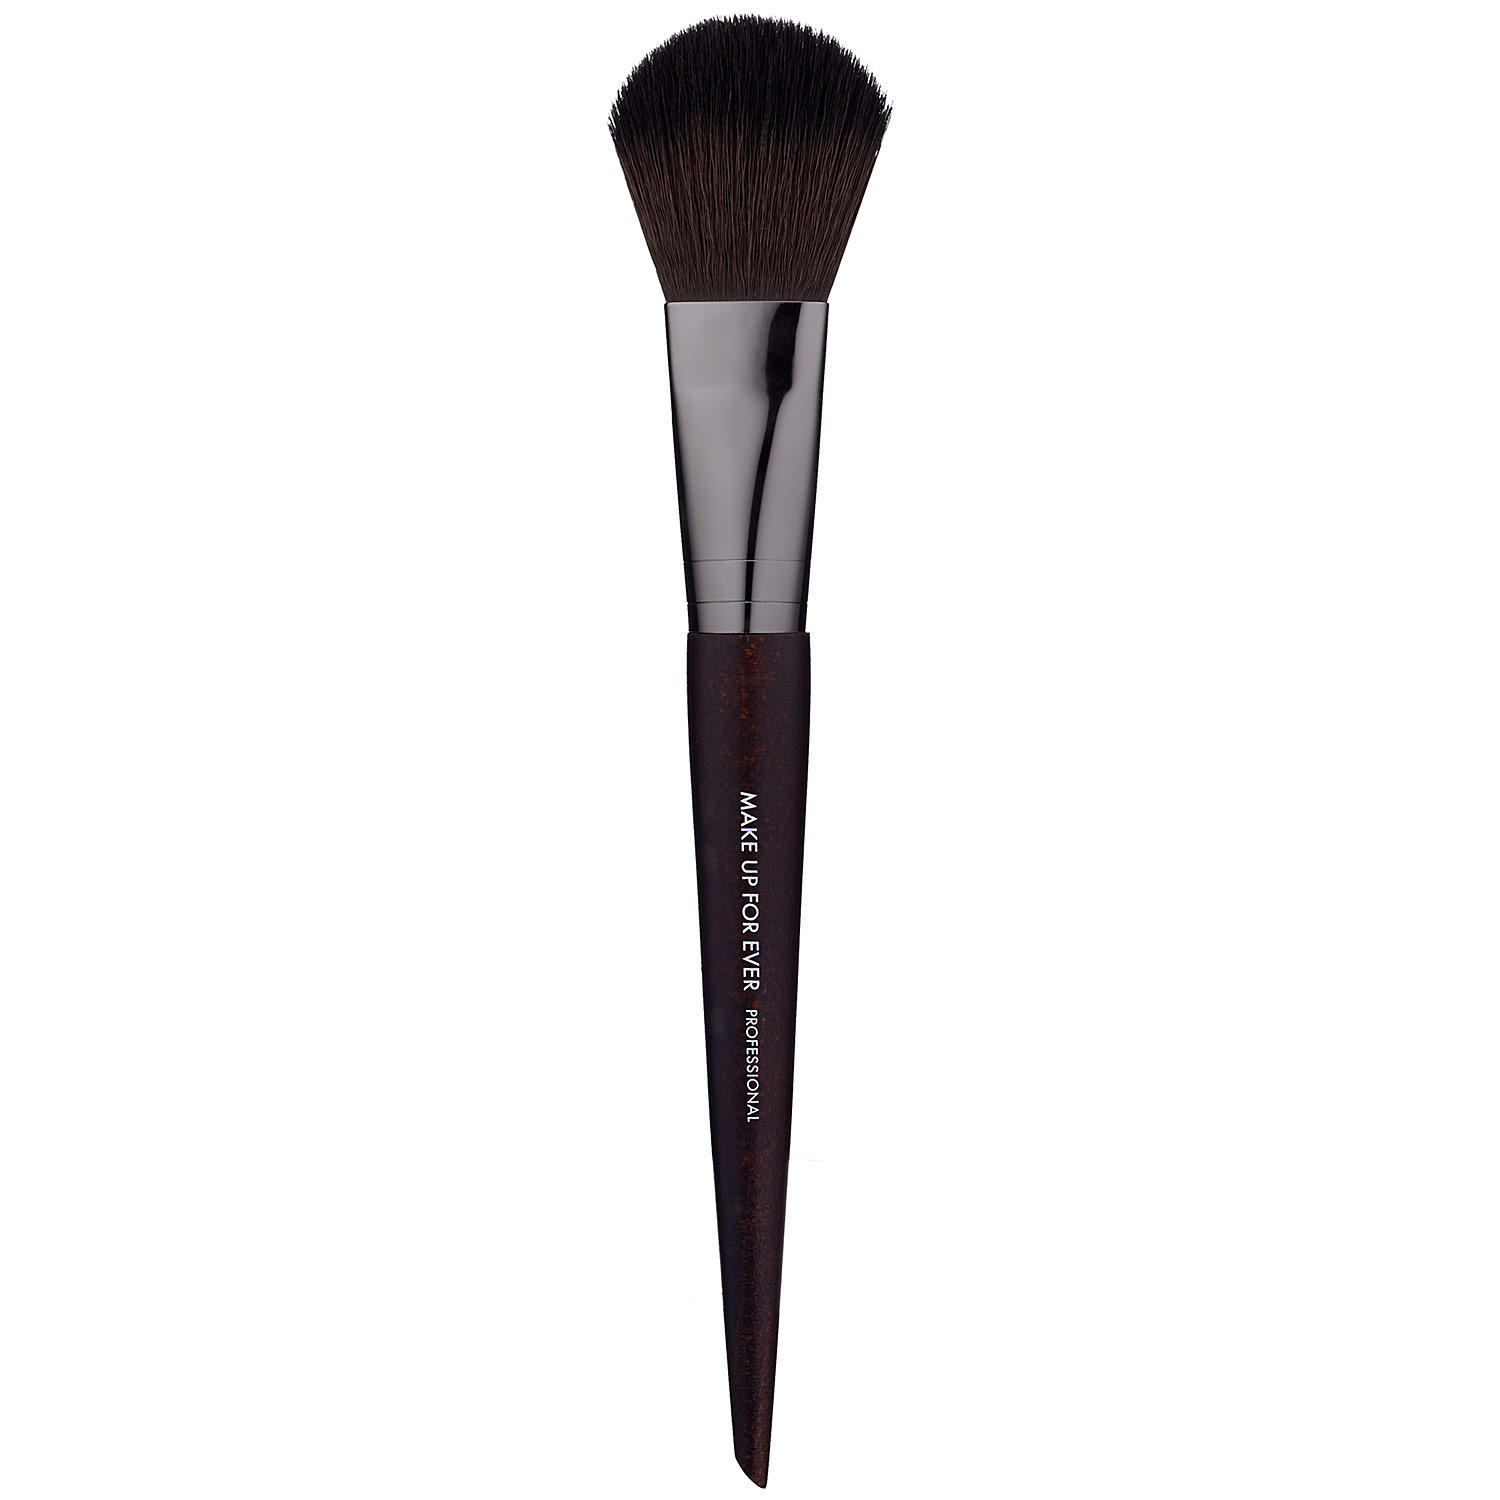 Makeup Forever Brush Wavy 156